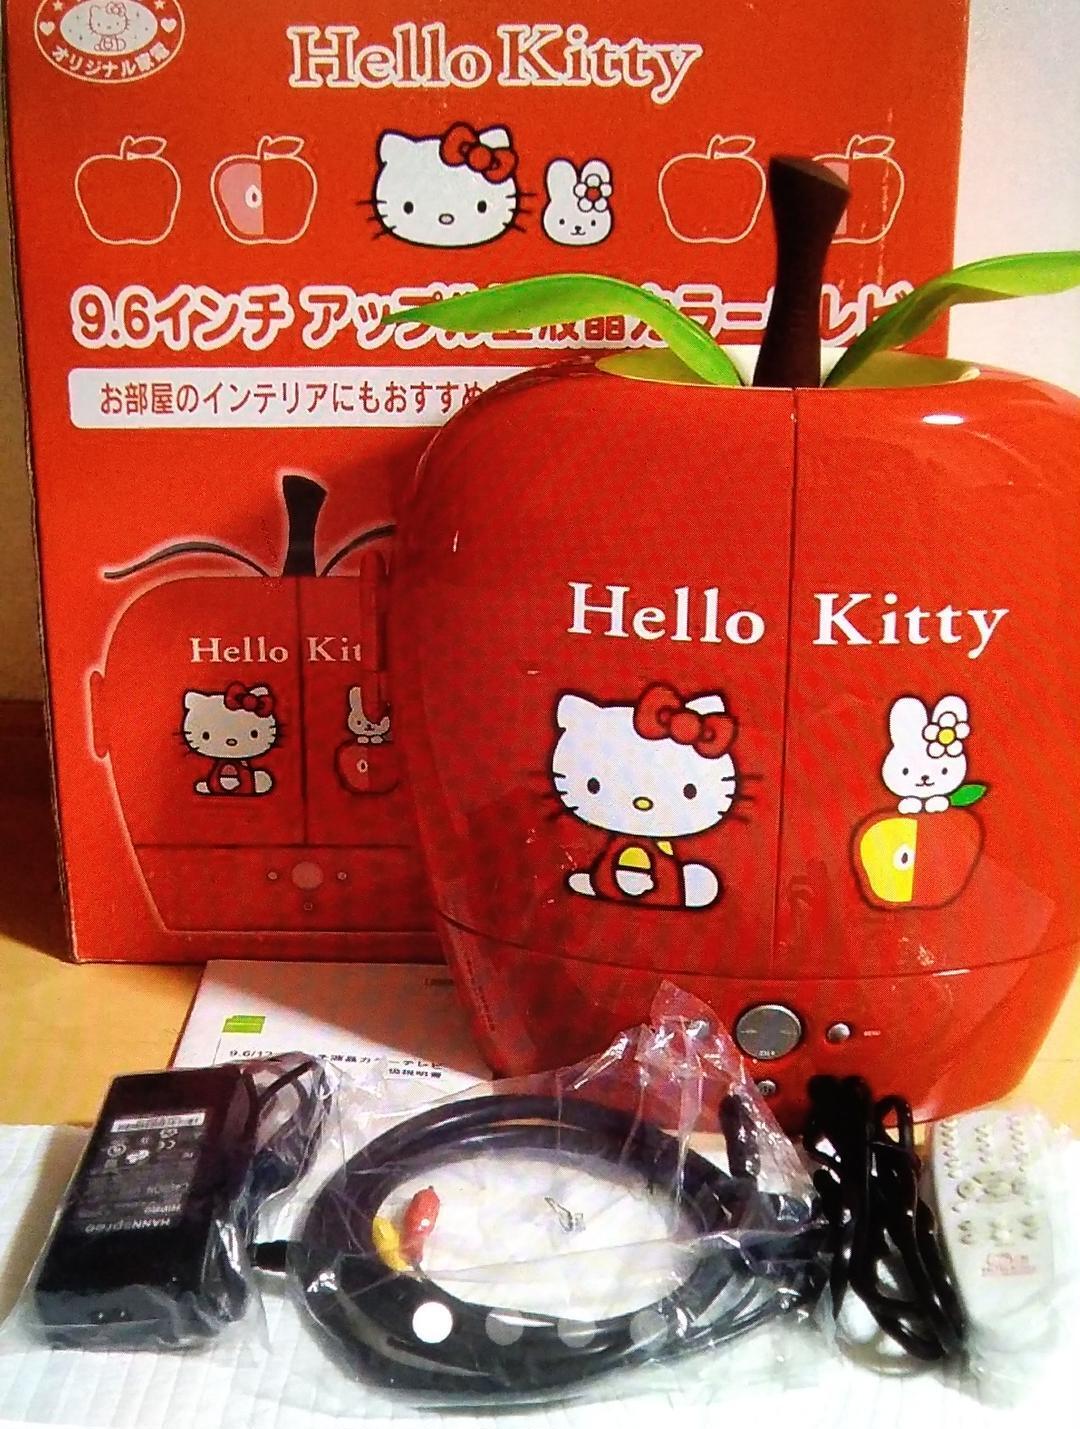 Sanrio Hello Kitty Apple TV 9.6 inch LCD Liquid Crystal Television Unused Rare